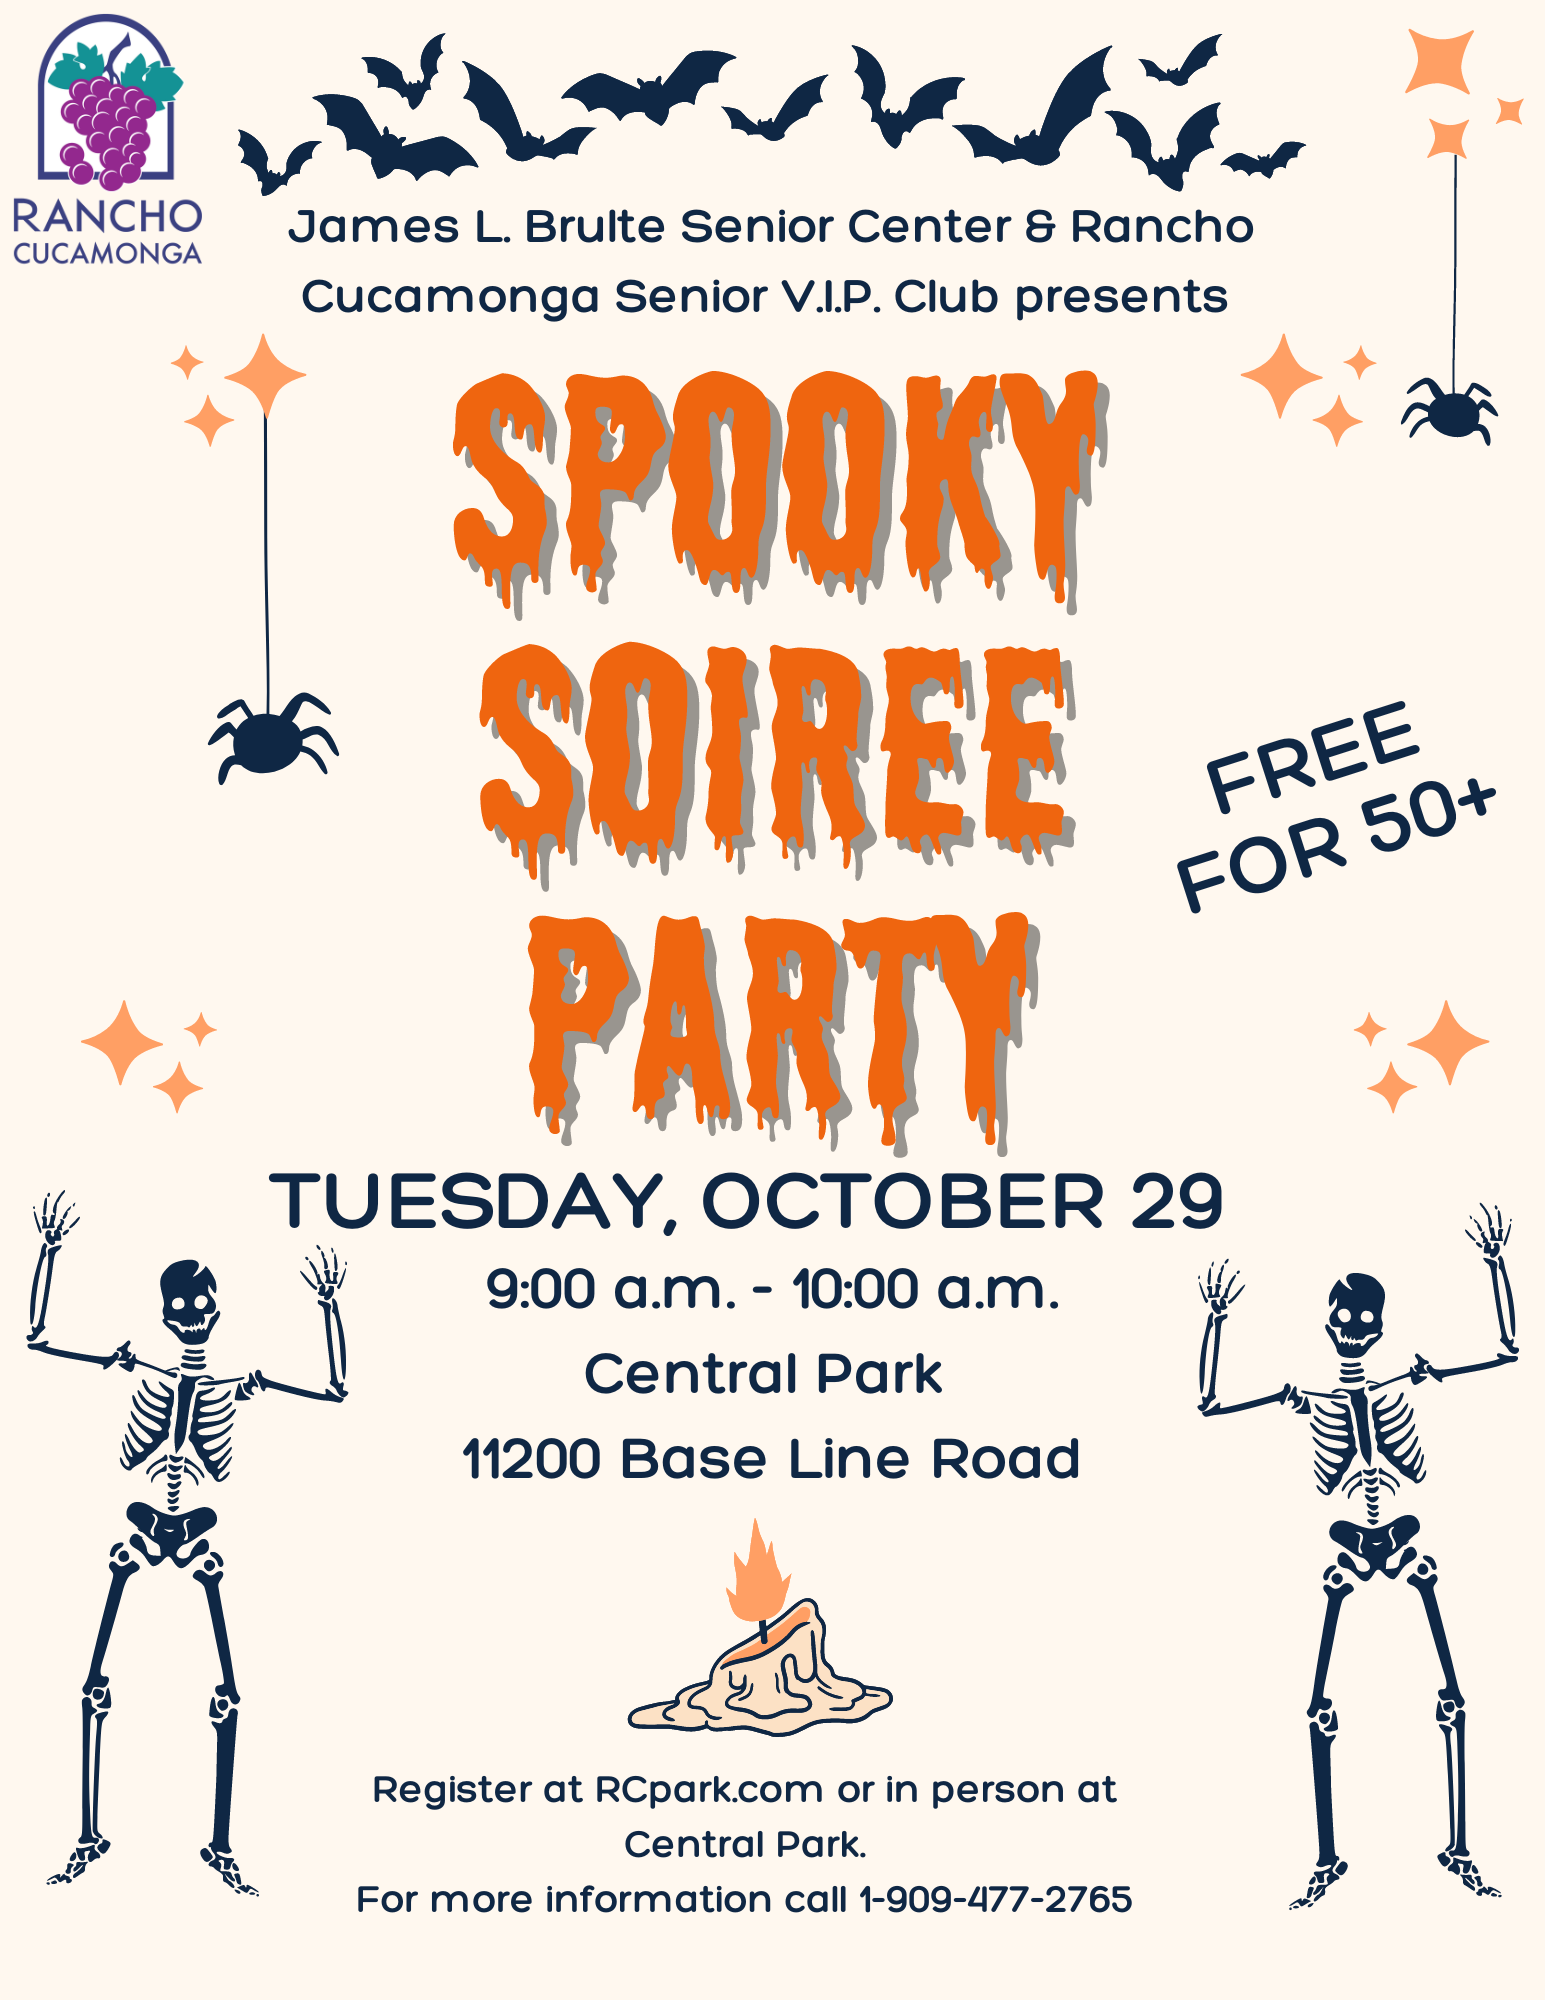 Senior Spooky Soiree Party